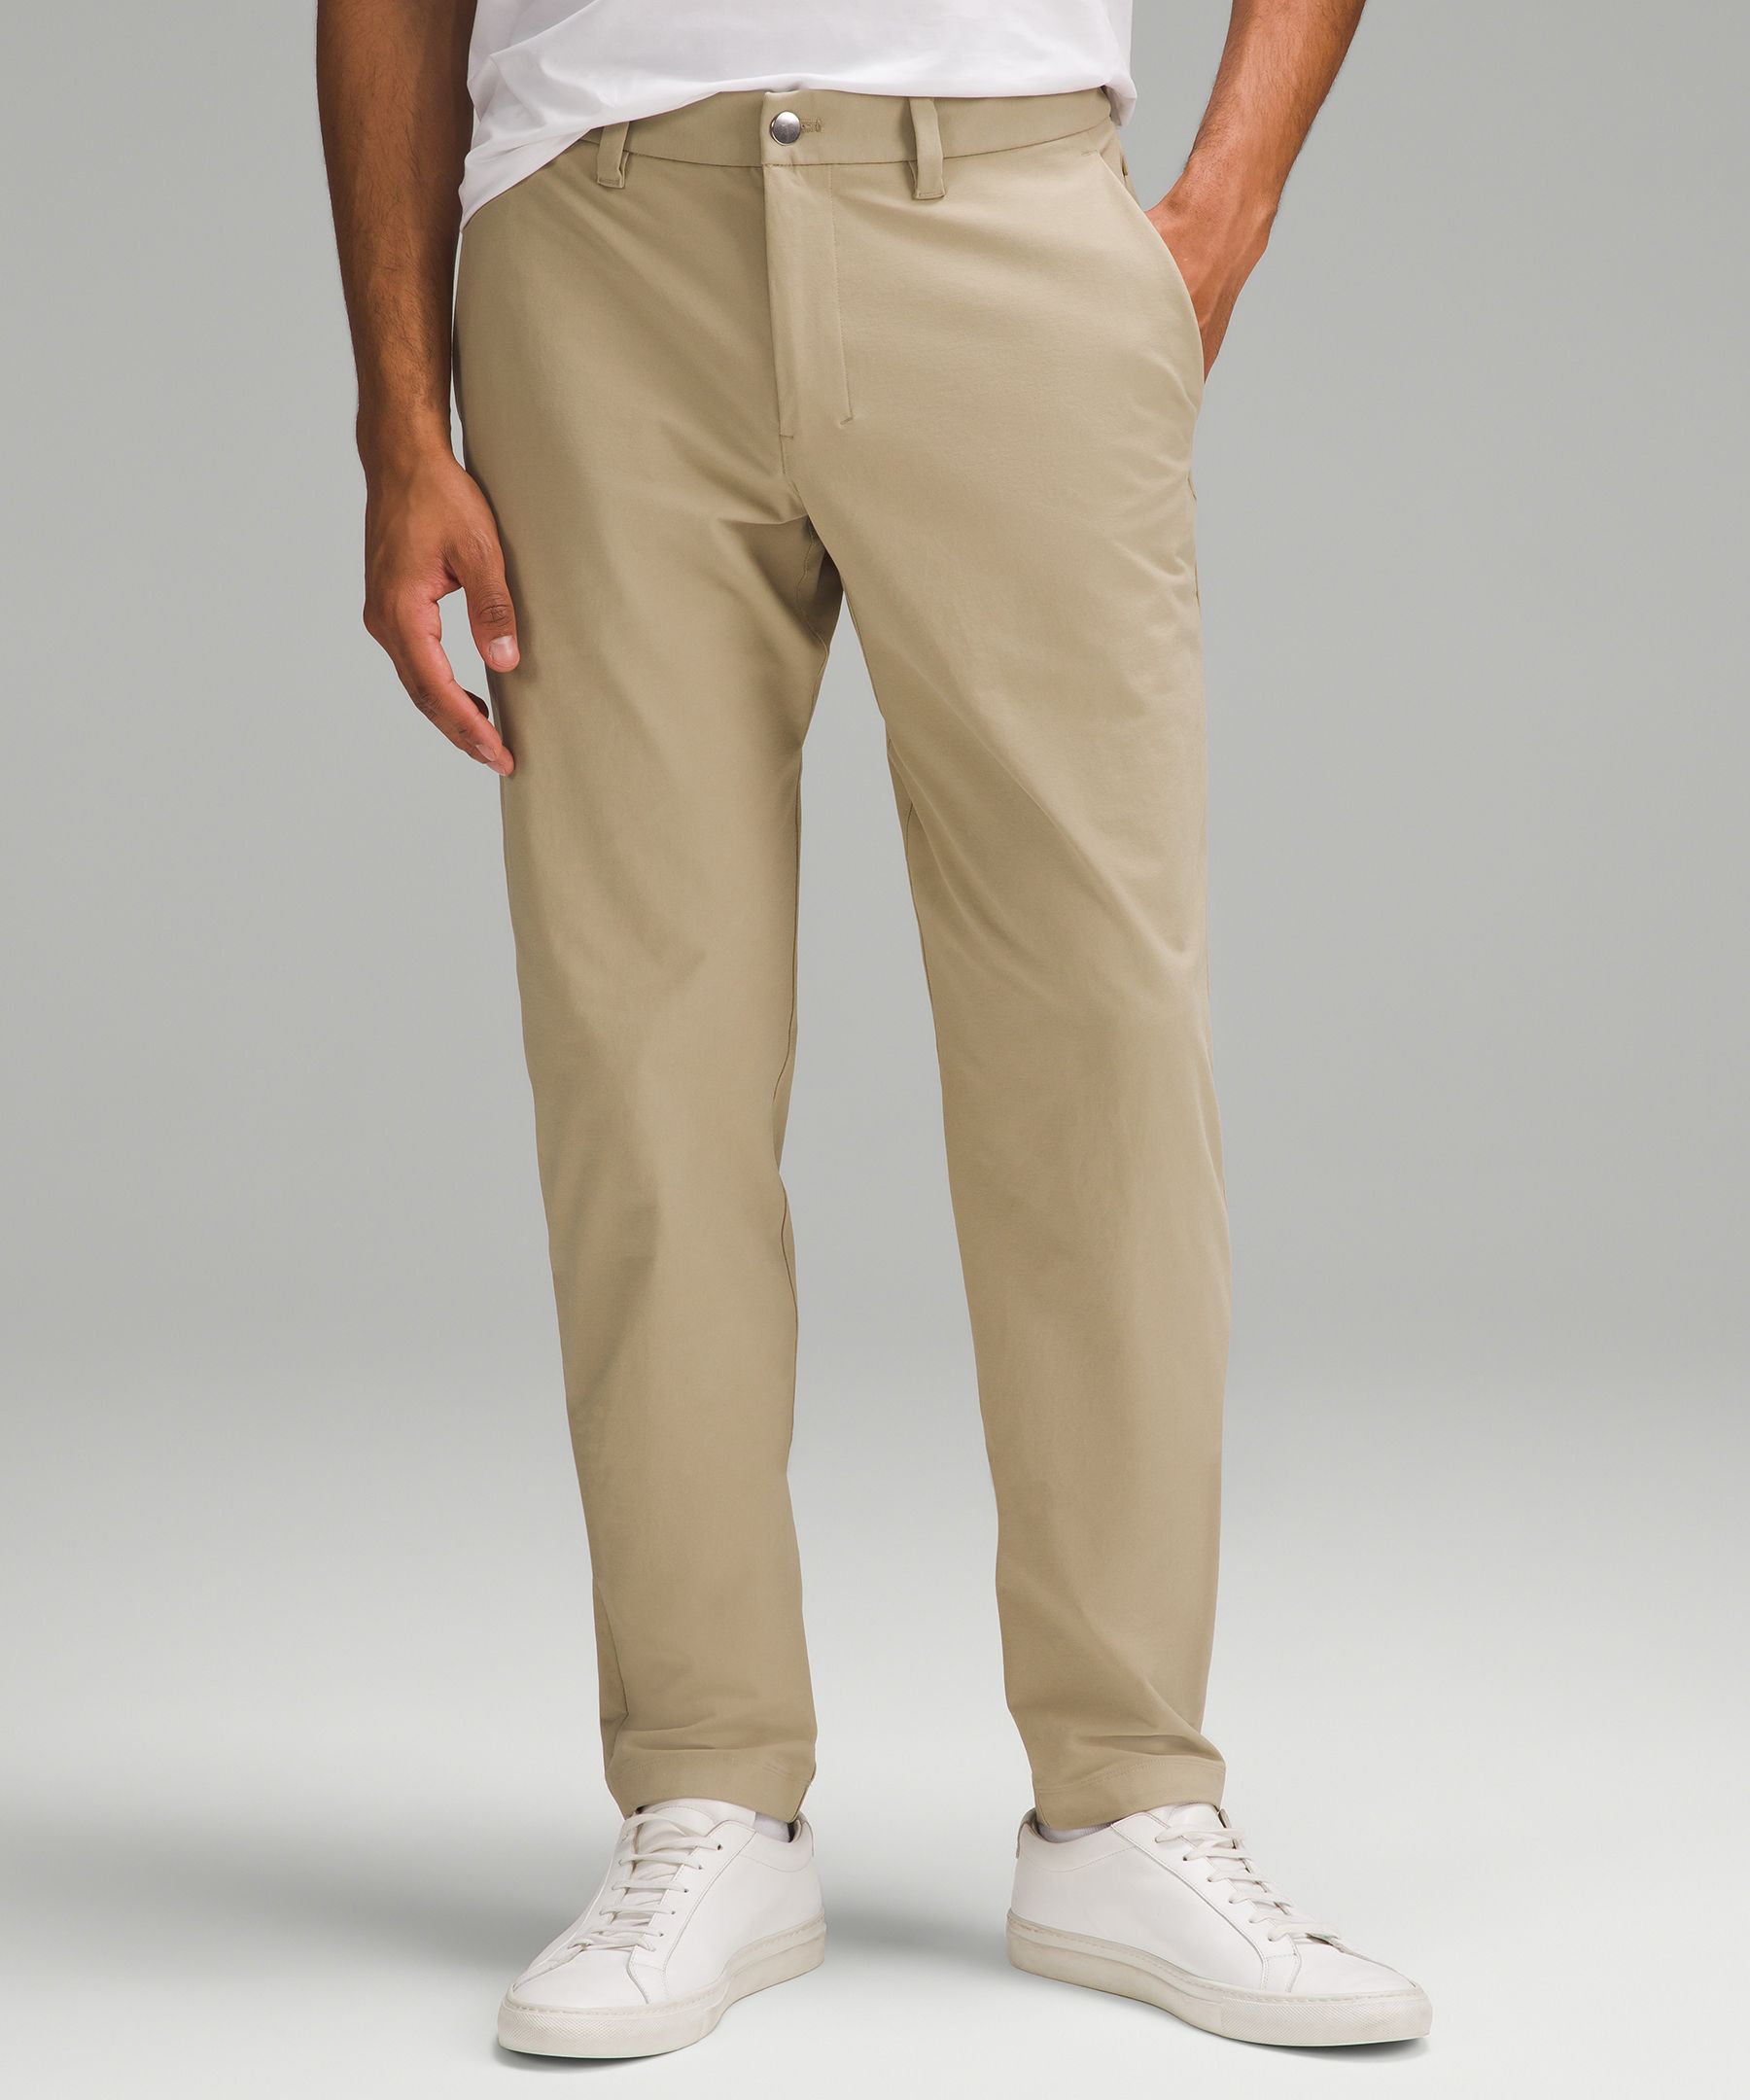 Lululemon Abc Slim-fit Trousers 34"l Stretch Cotton Versatwill